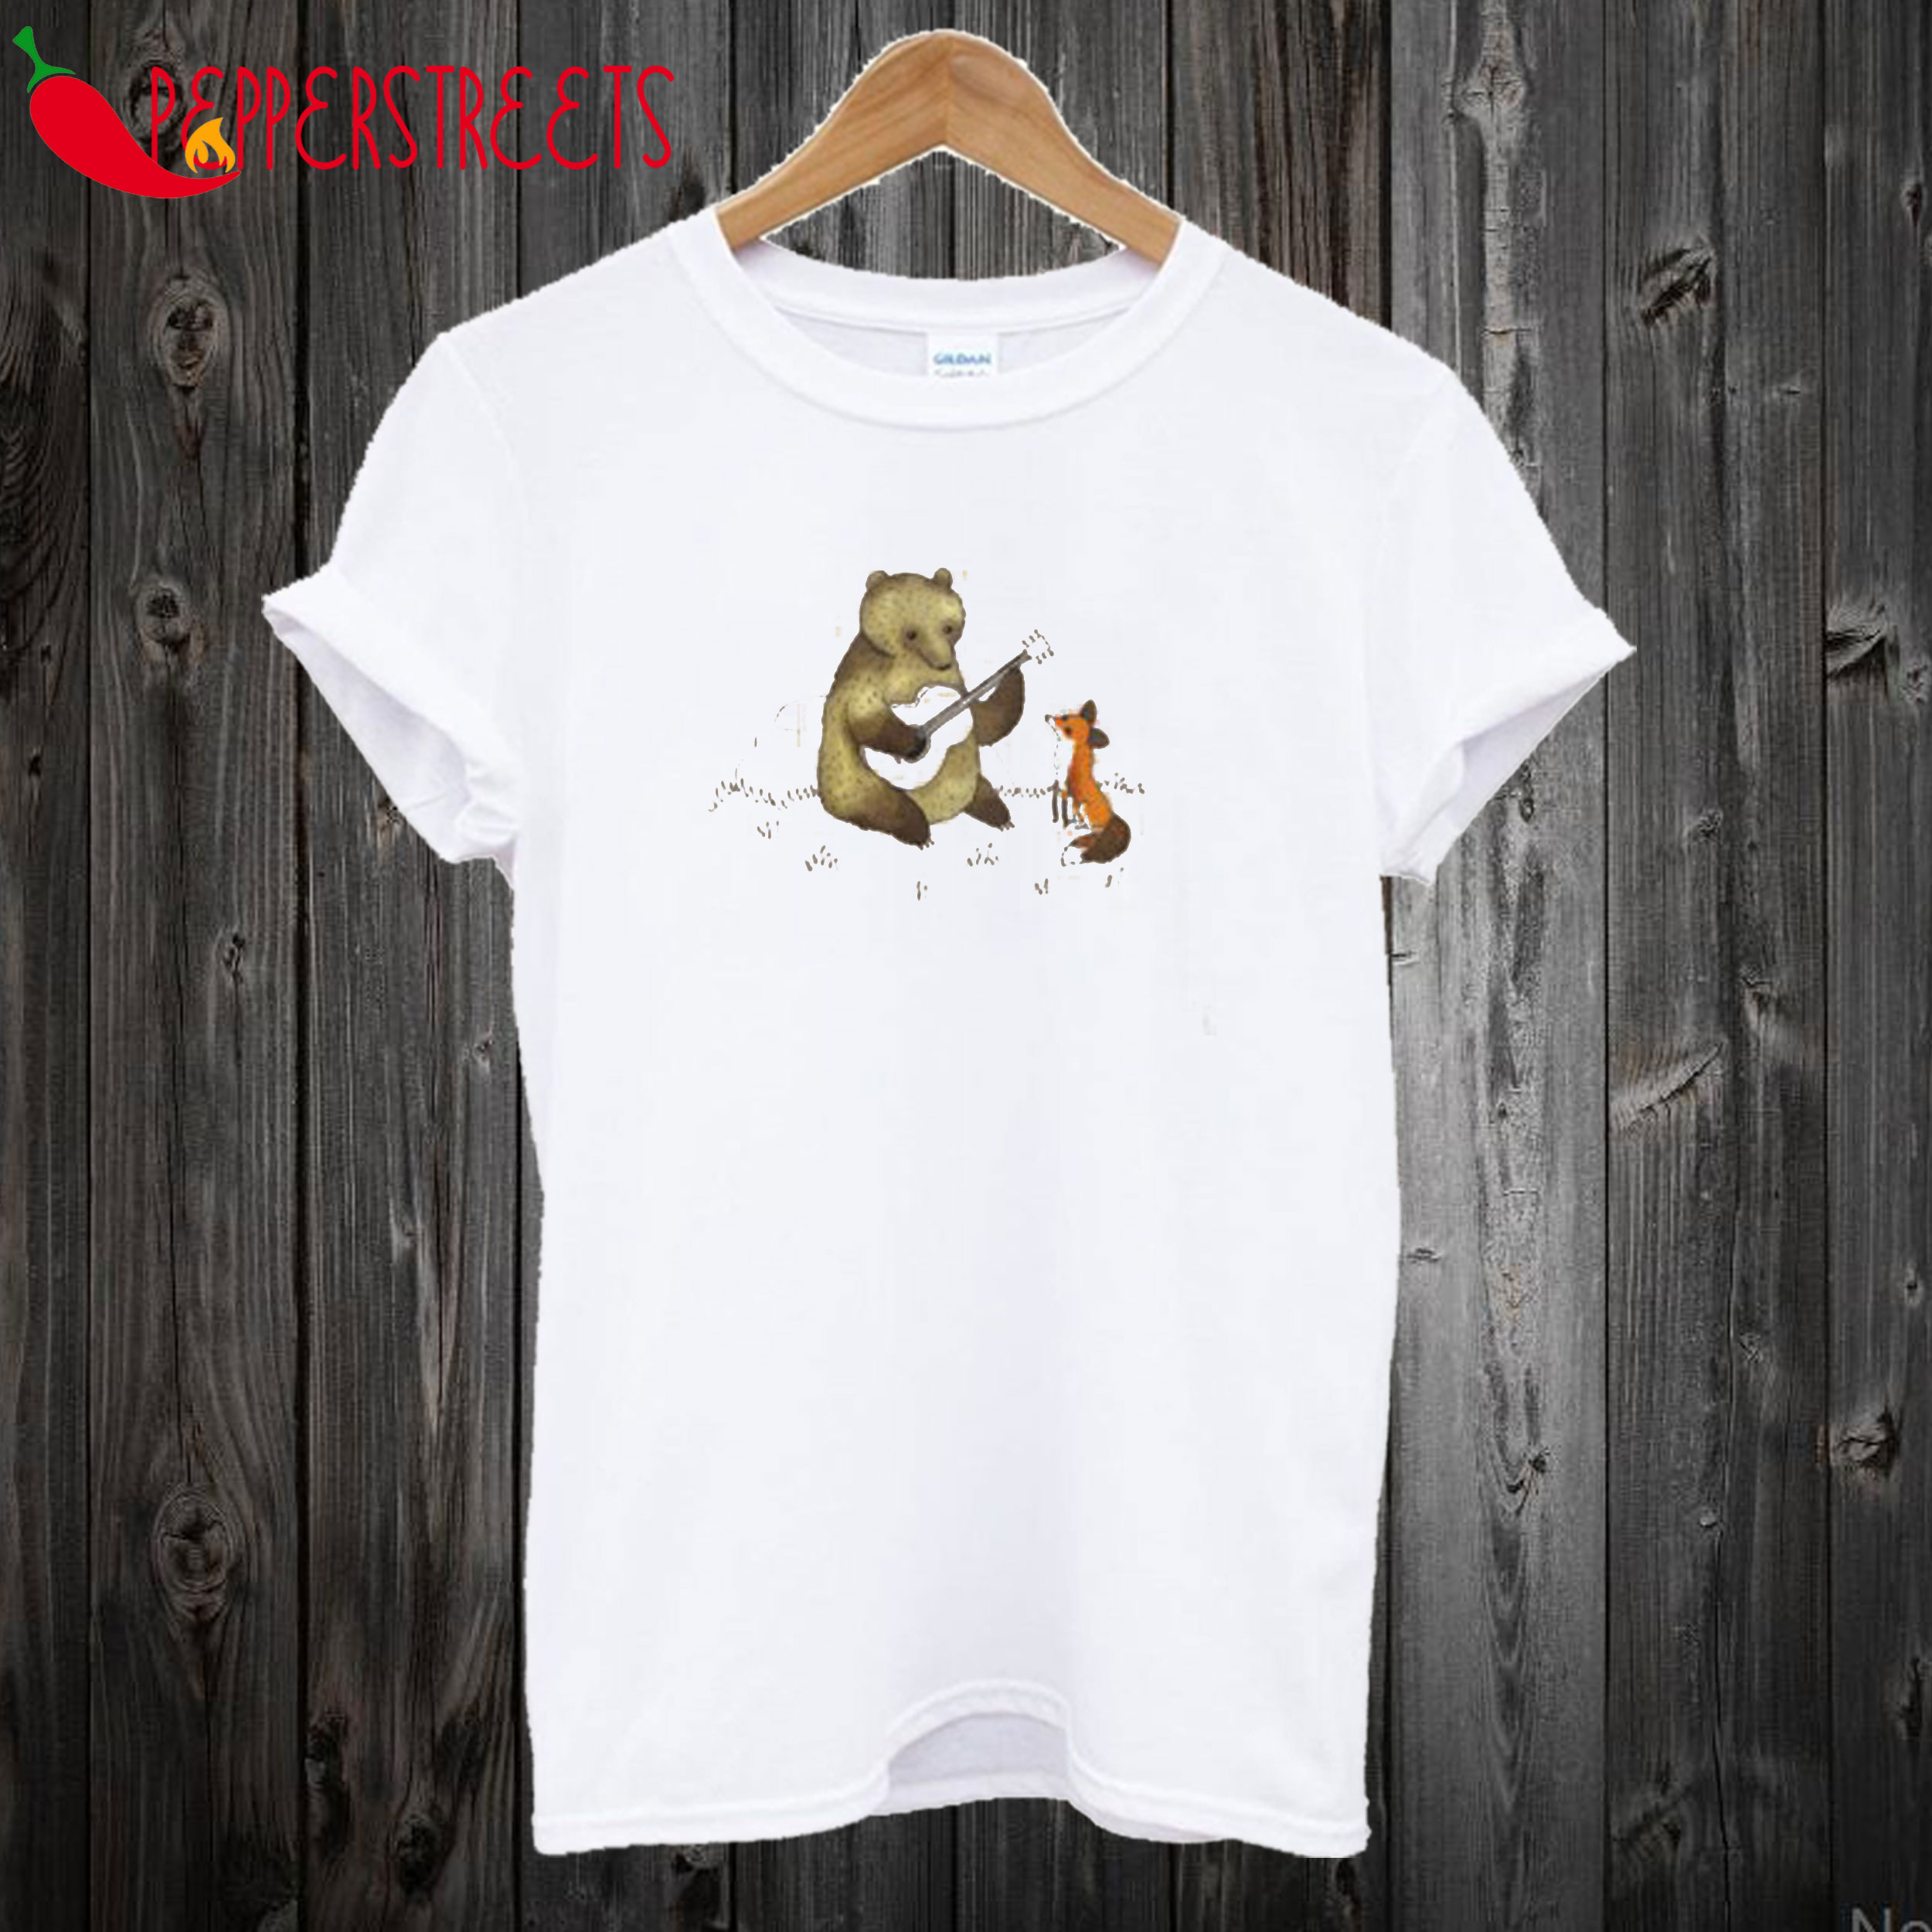 Bear & Fox Classic T-Shirt